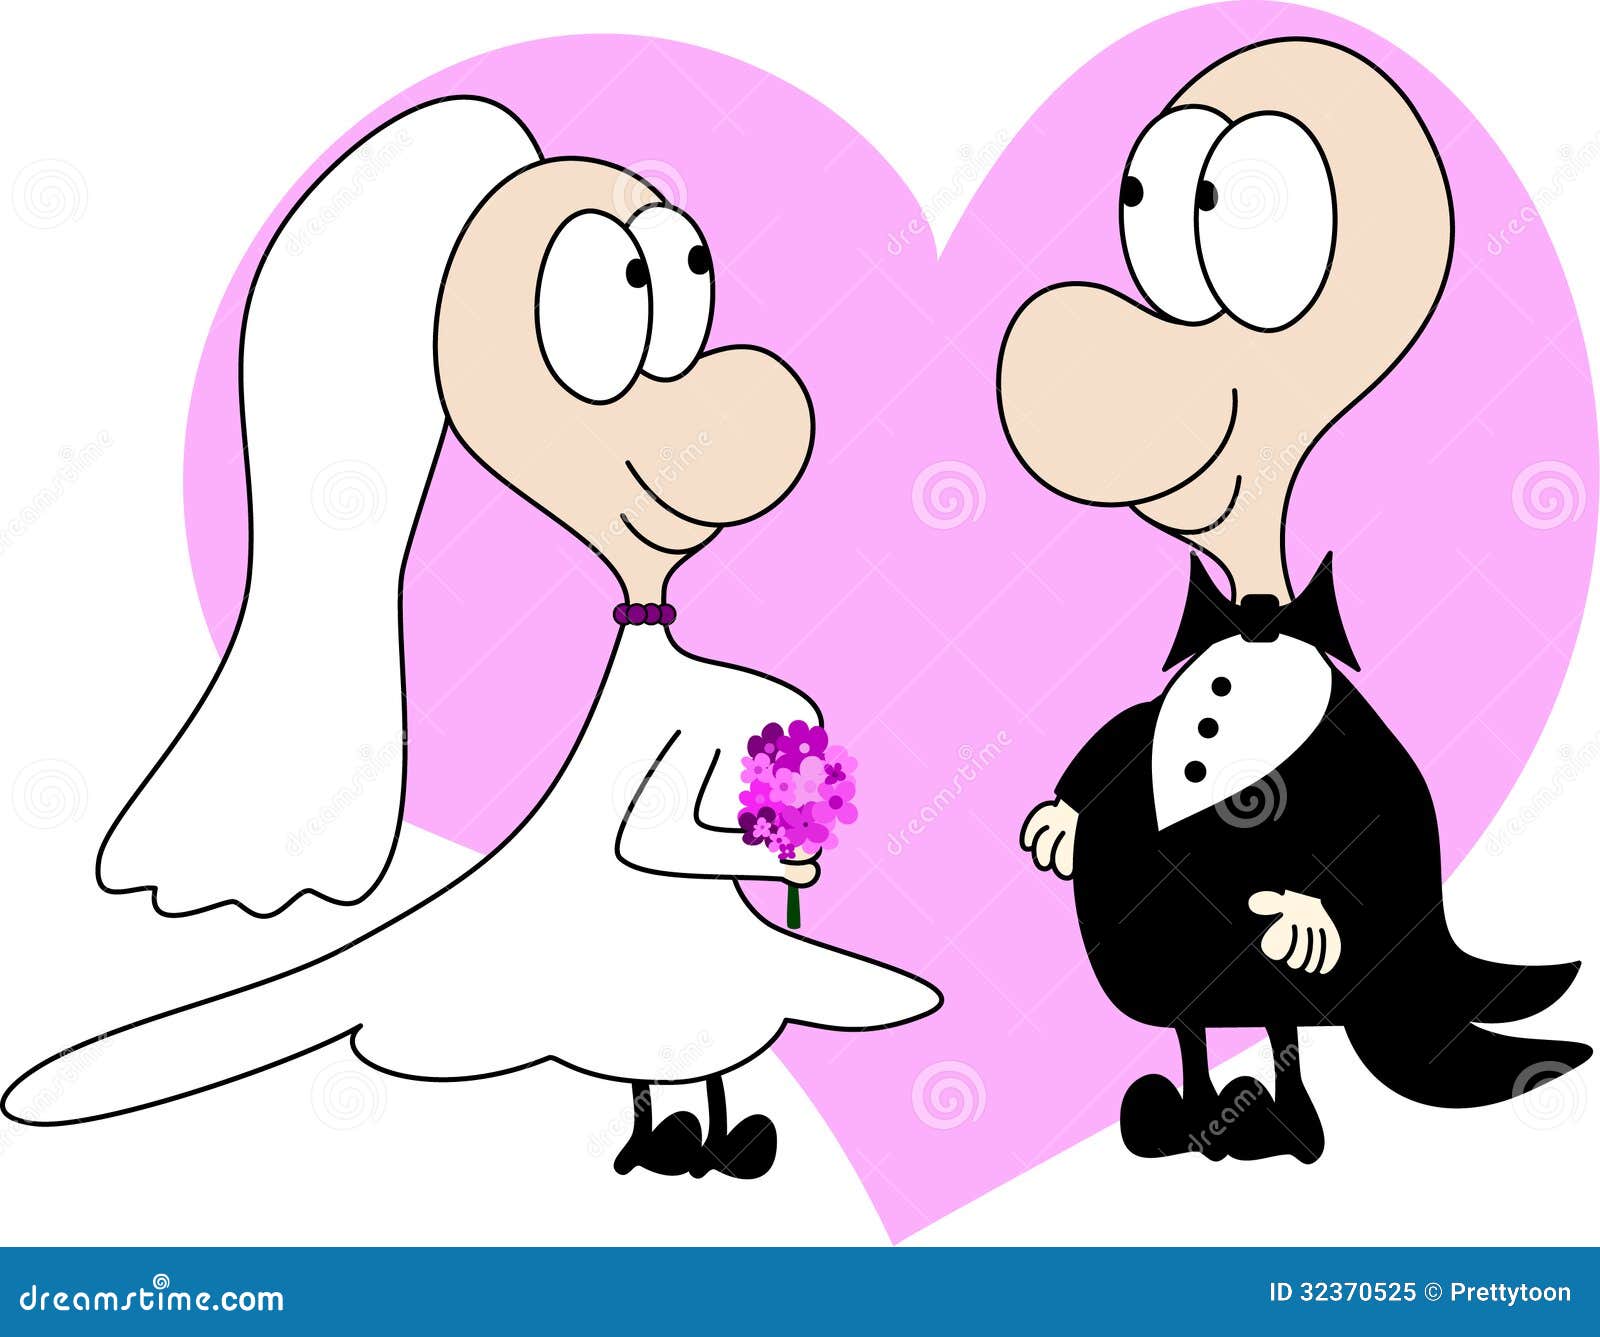 Wedding couple cartoon stock illustration. Illustration of isolated -  32370525